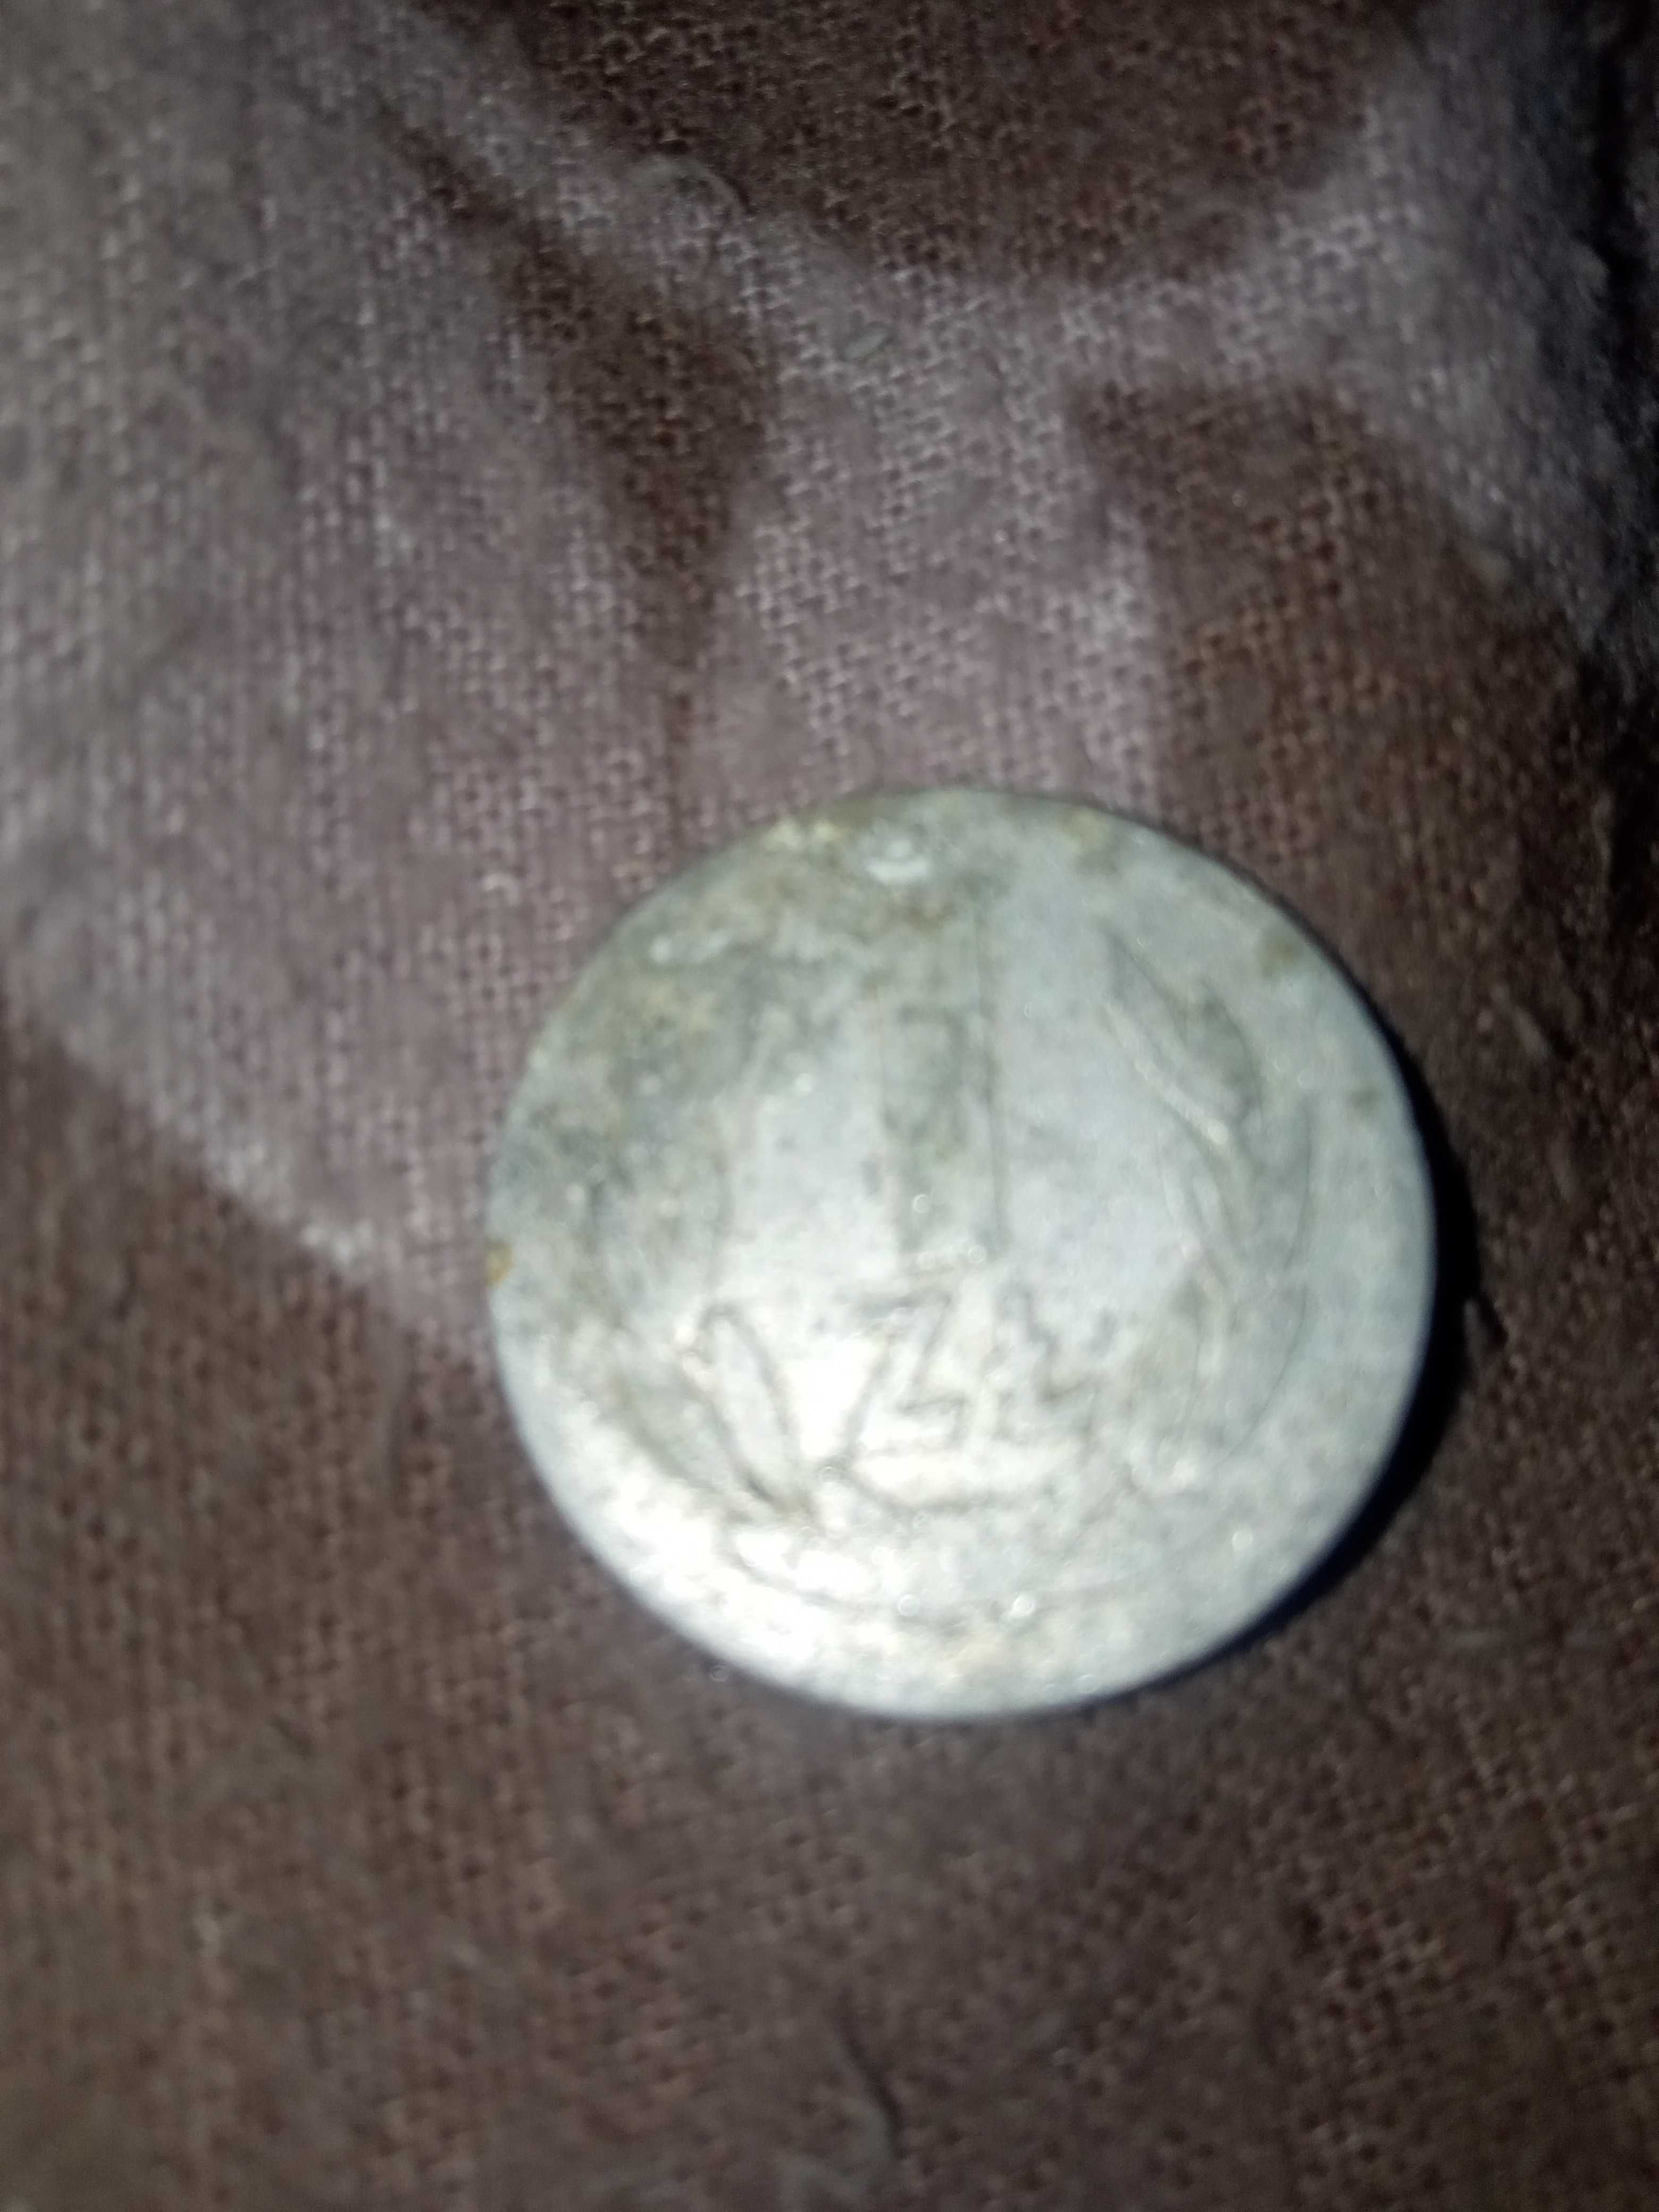 Moneta 1zł z 1949 roku aluminiowa bez znaku mennicy